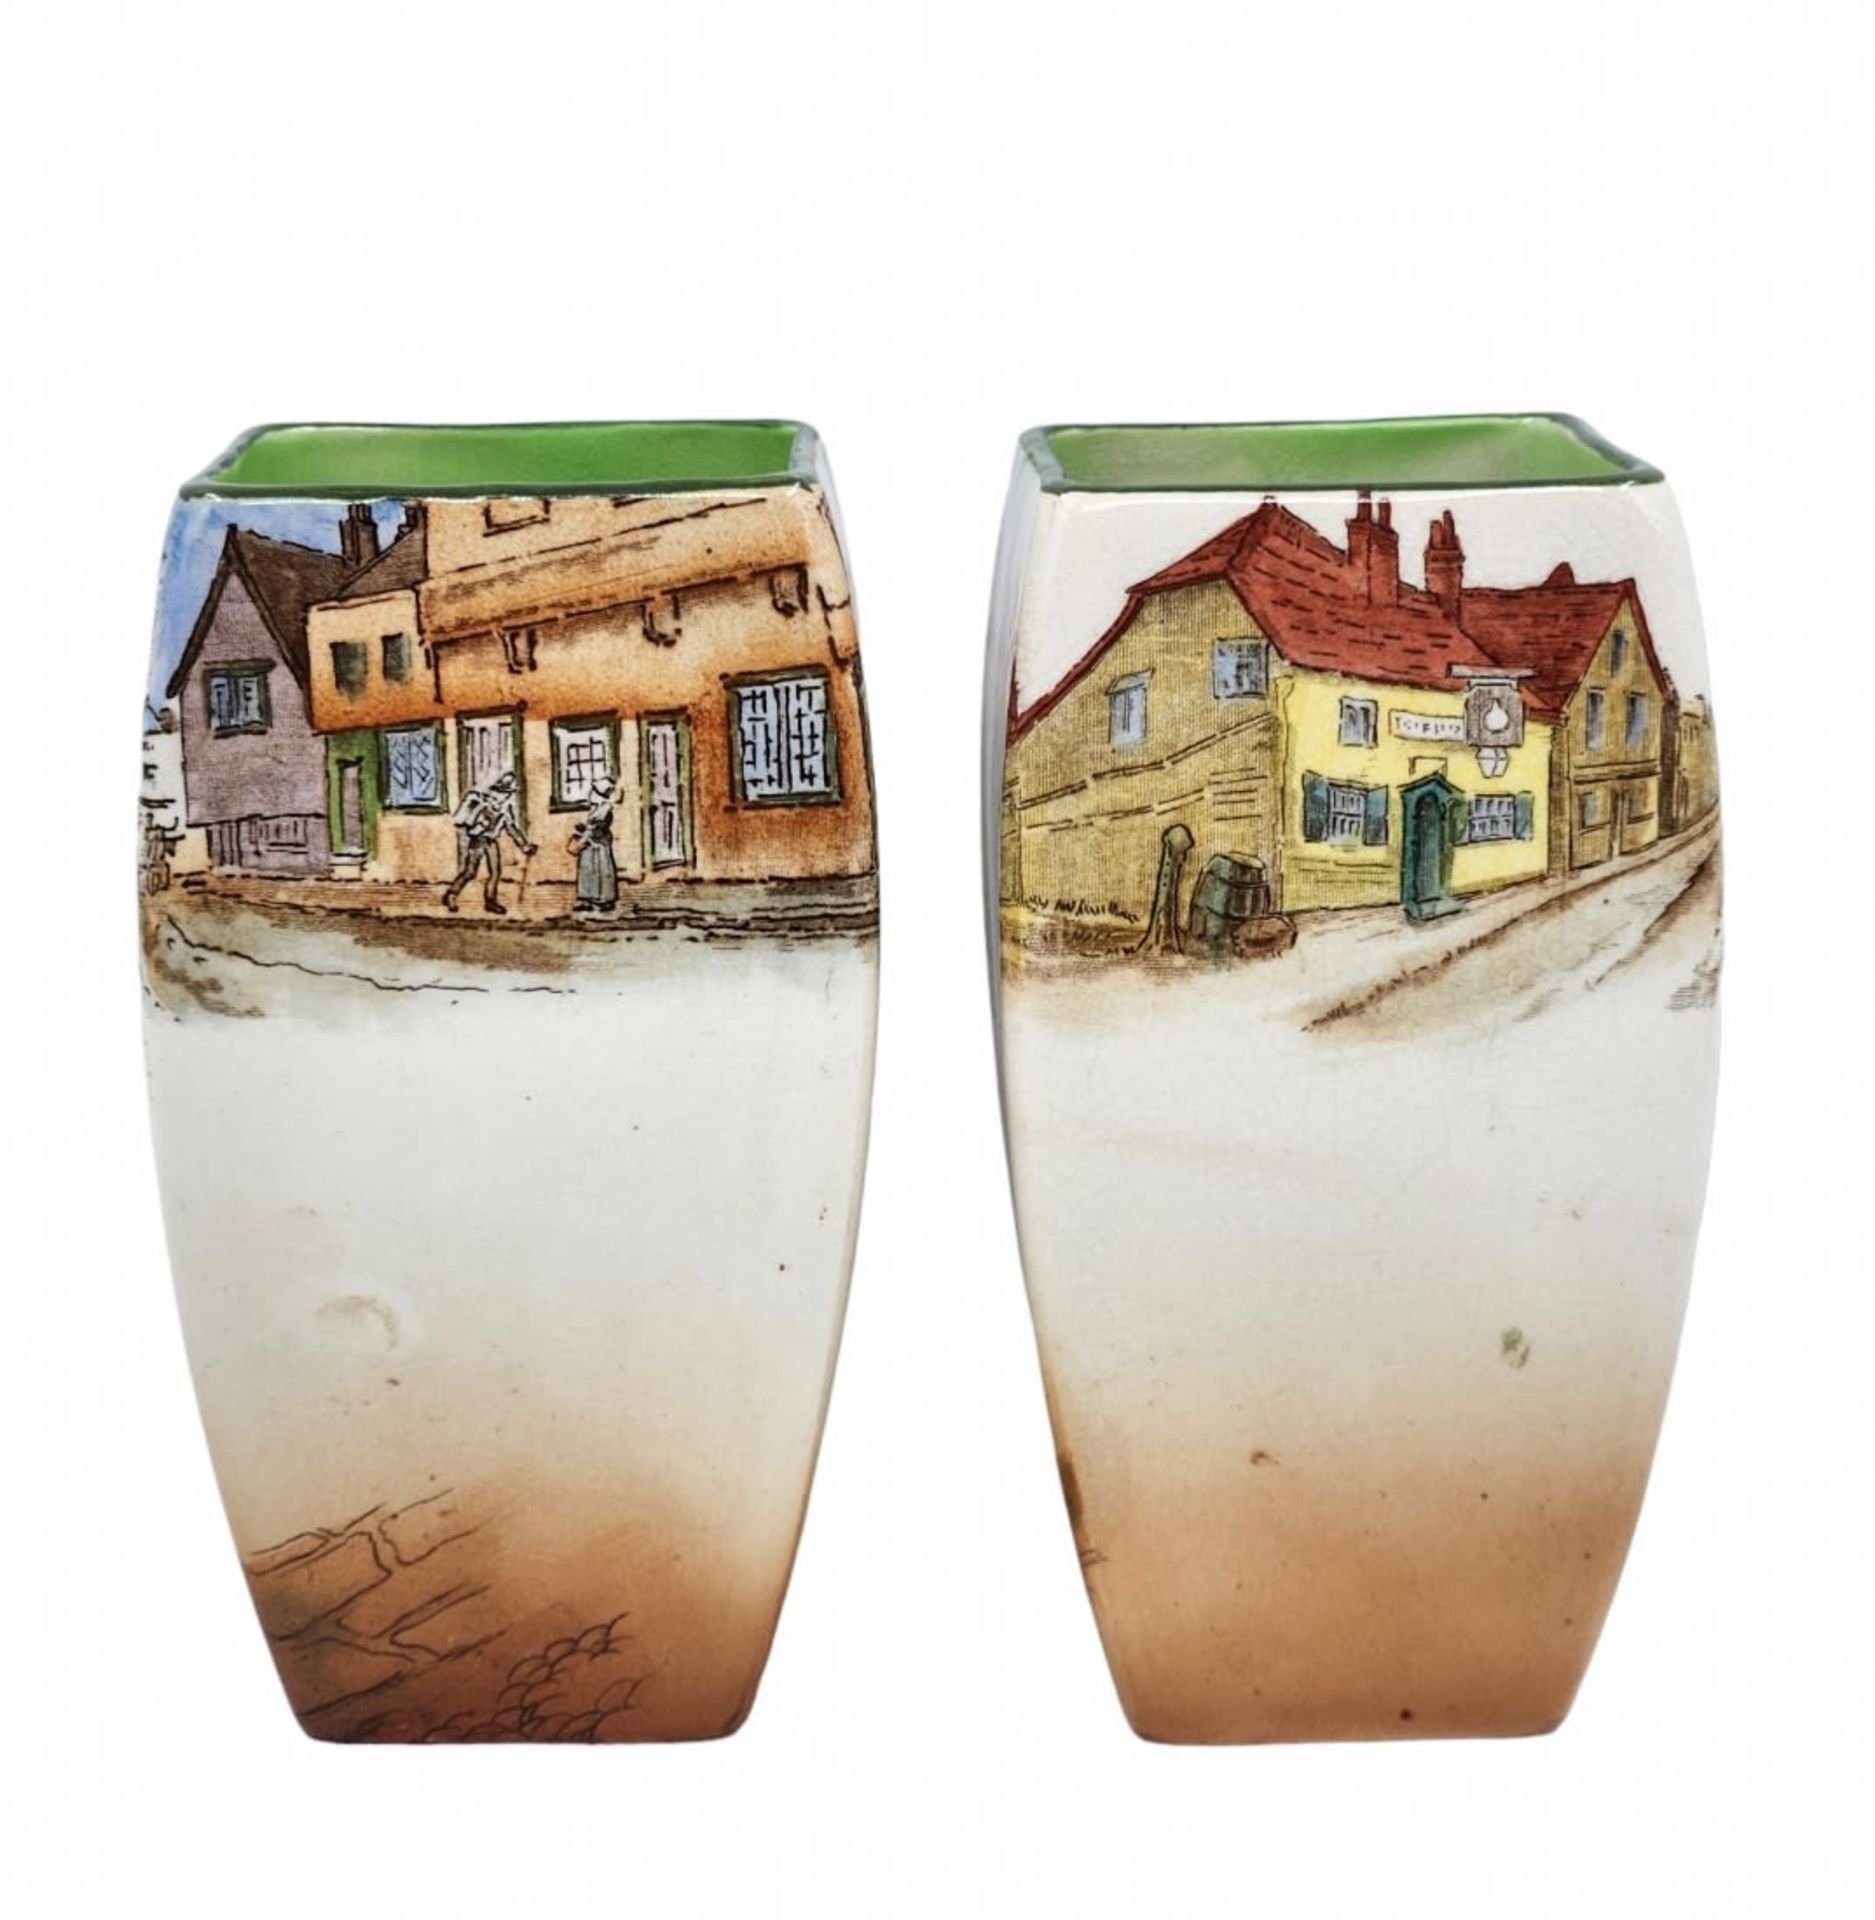 A pair of English jugs made by Royal Doulton (Royal Doulton), dickens Ware series, decorative - Image 3 of 7